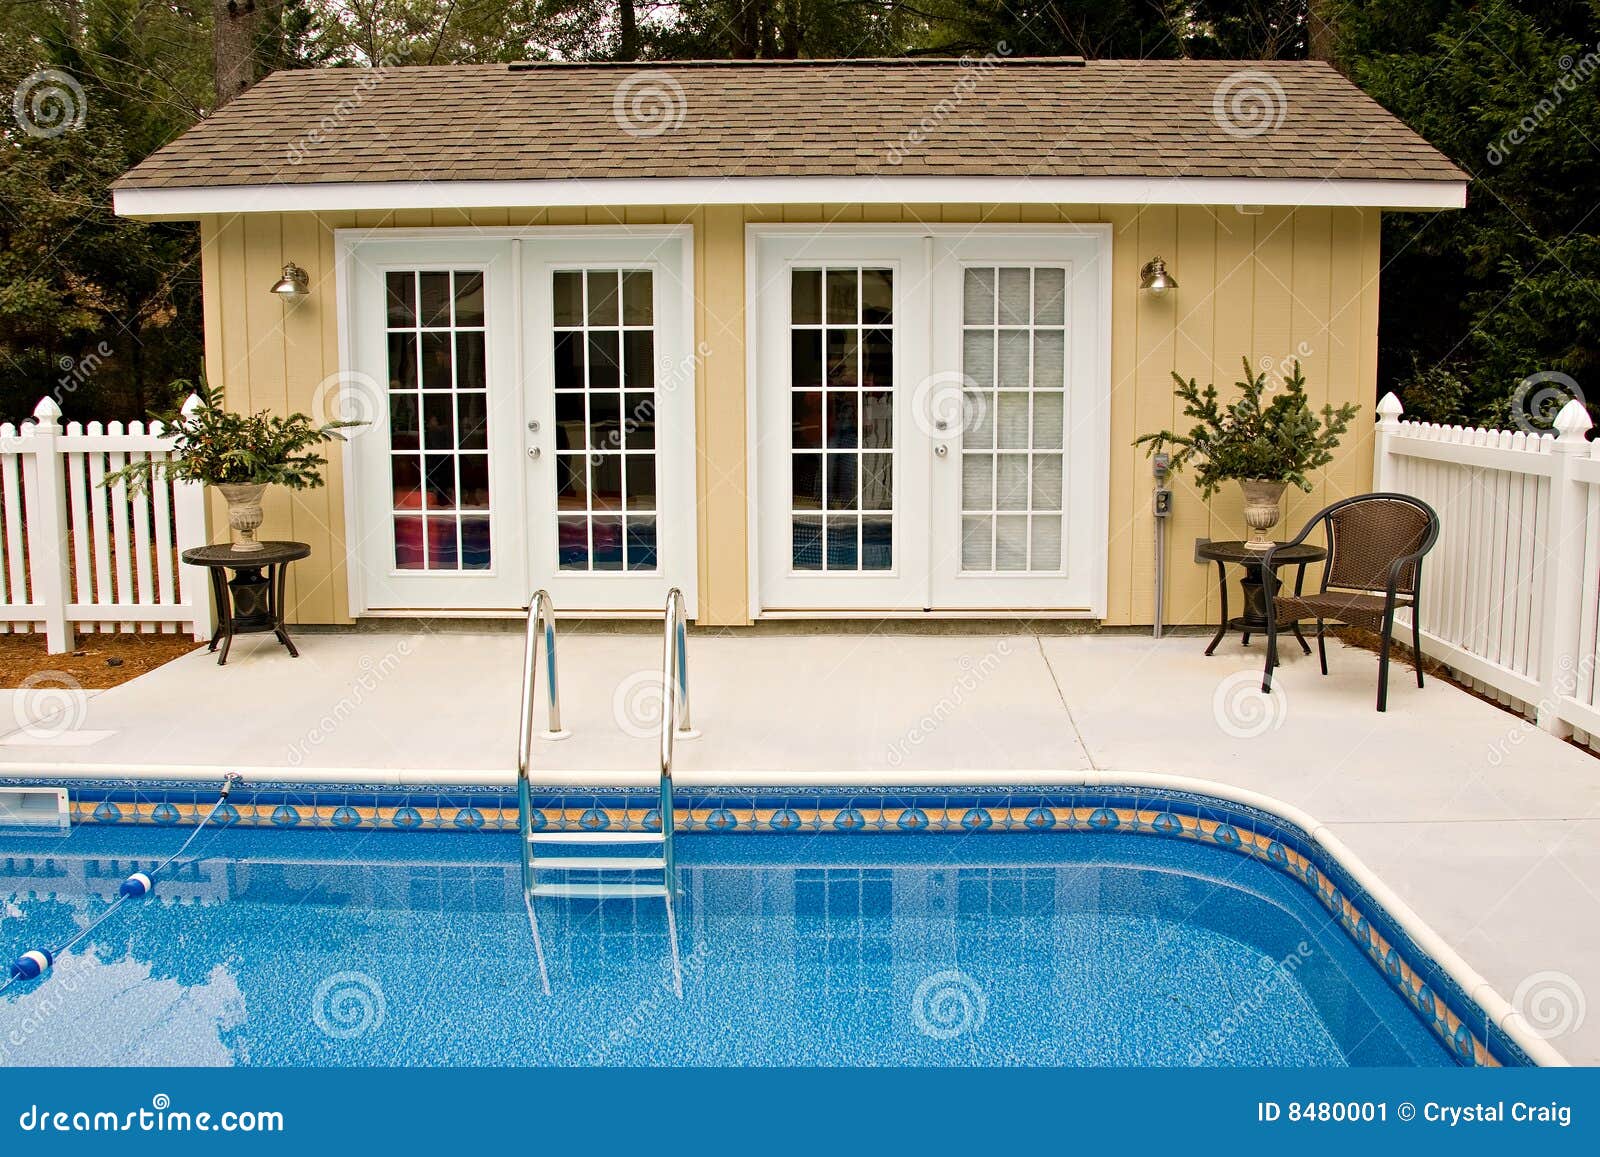 Backyard Pool House Stock Image Image Of Swimming Project 8480001